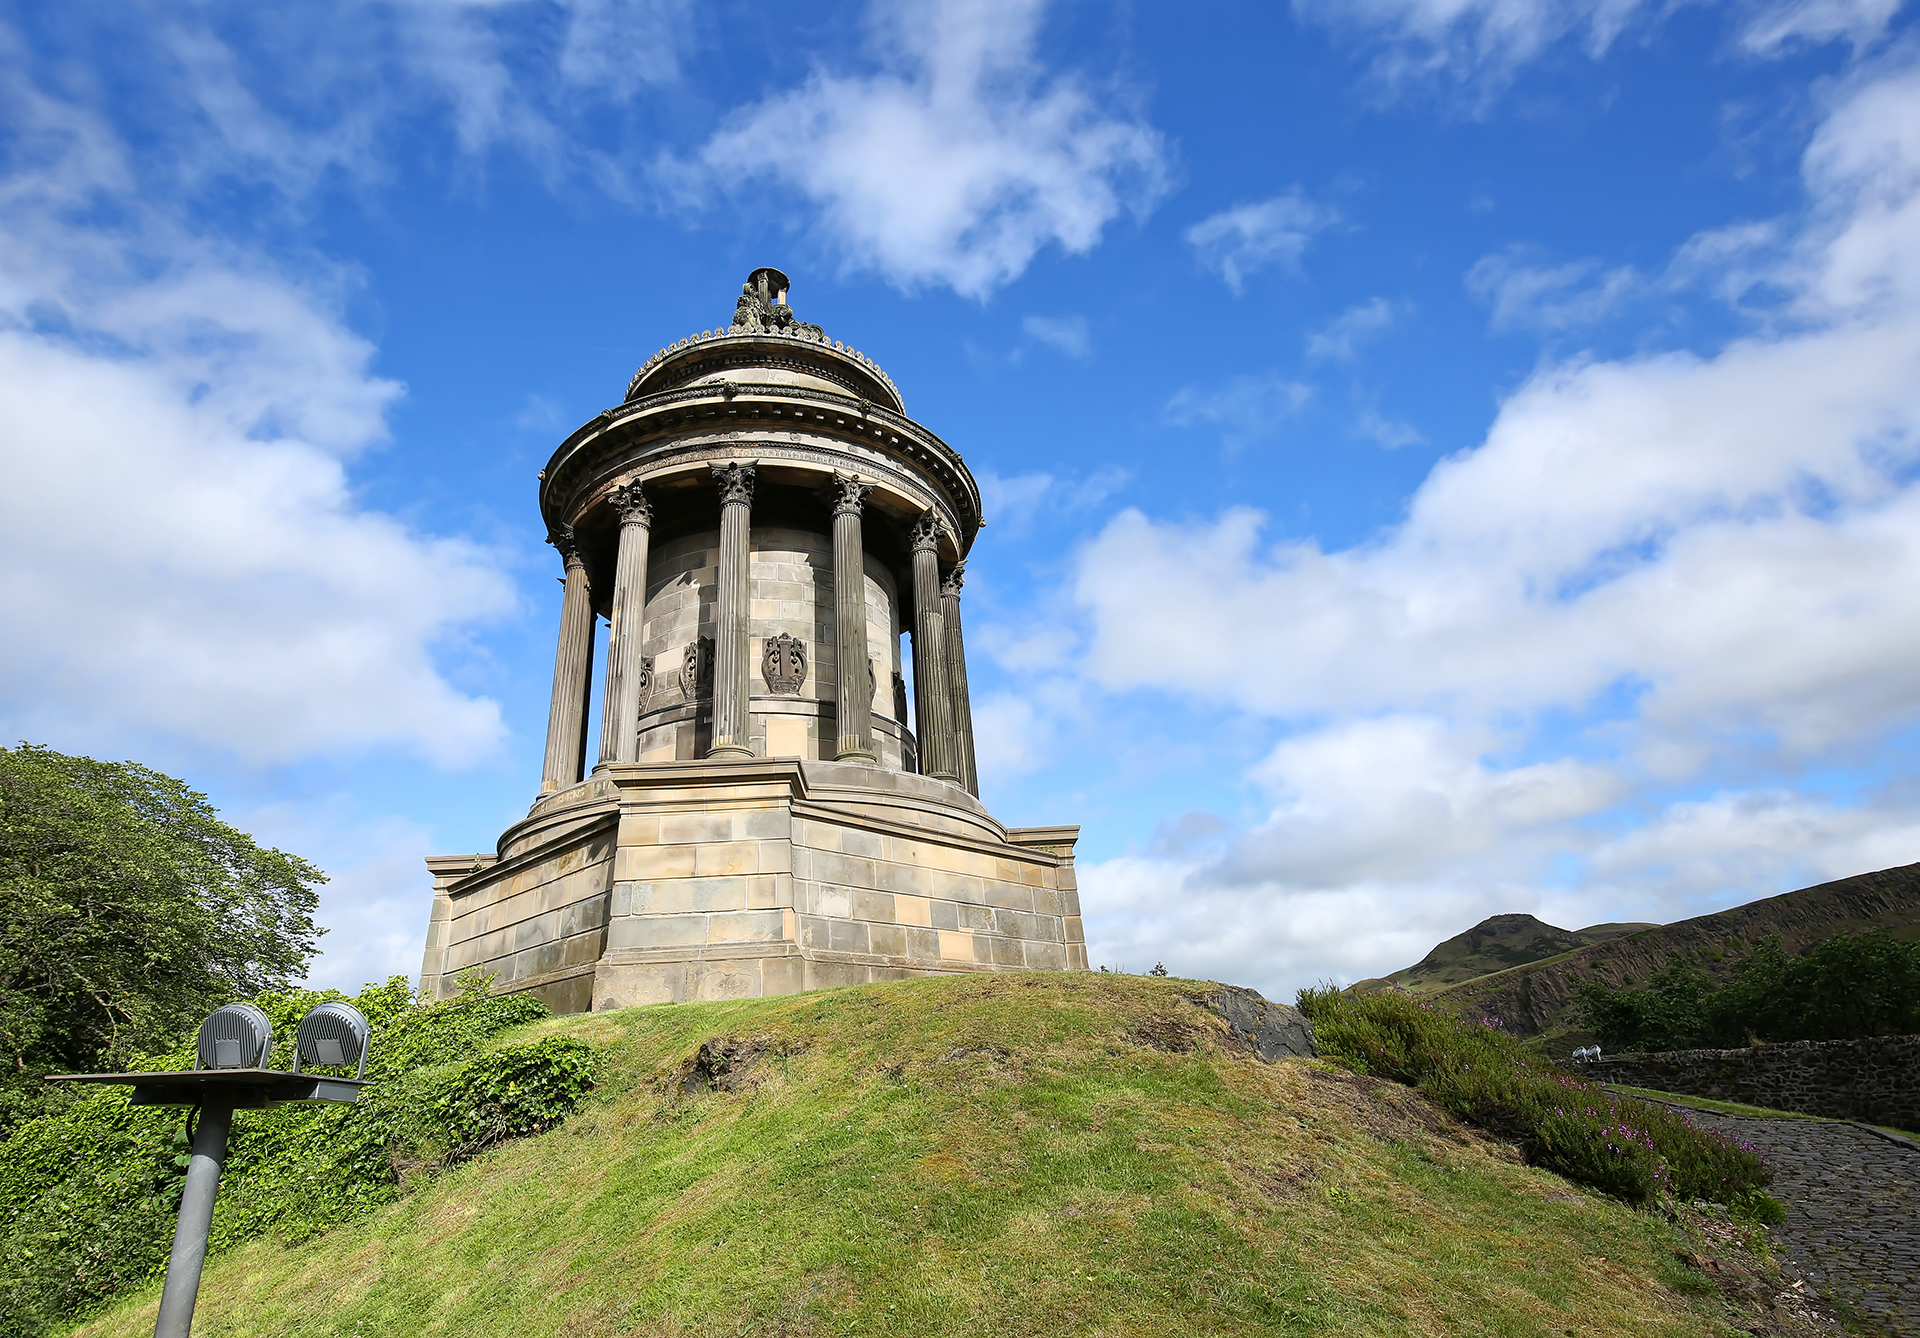 Robert Burns Monument on Regent Road in Edinburgh, Scotland.  Robert Burns is considered the National Poet of Scotland.